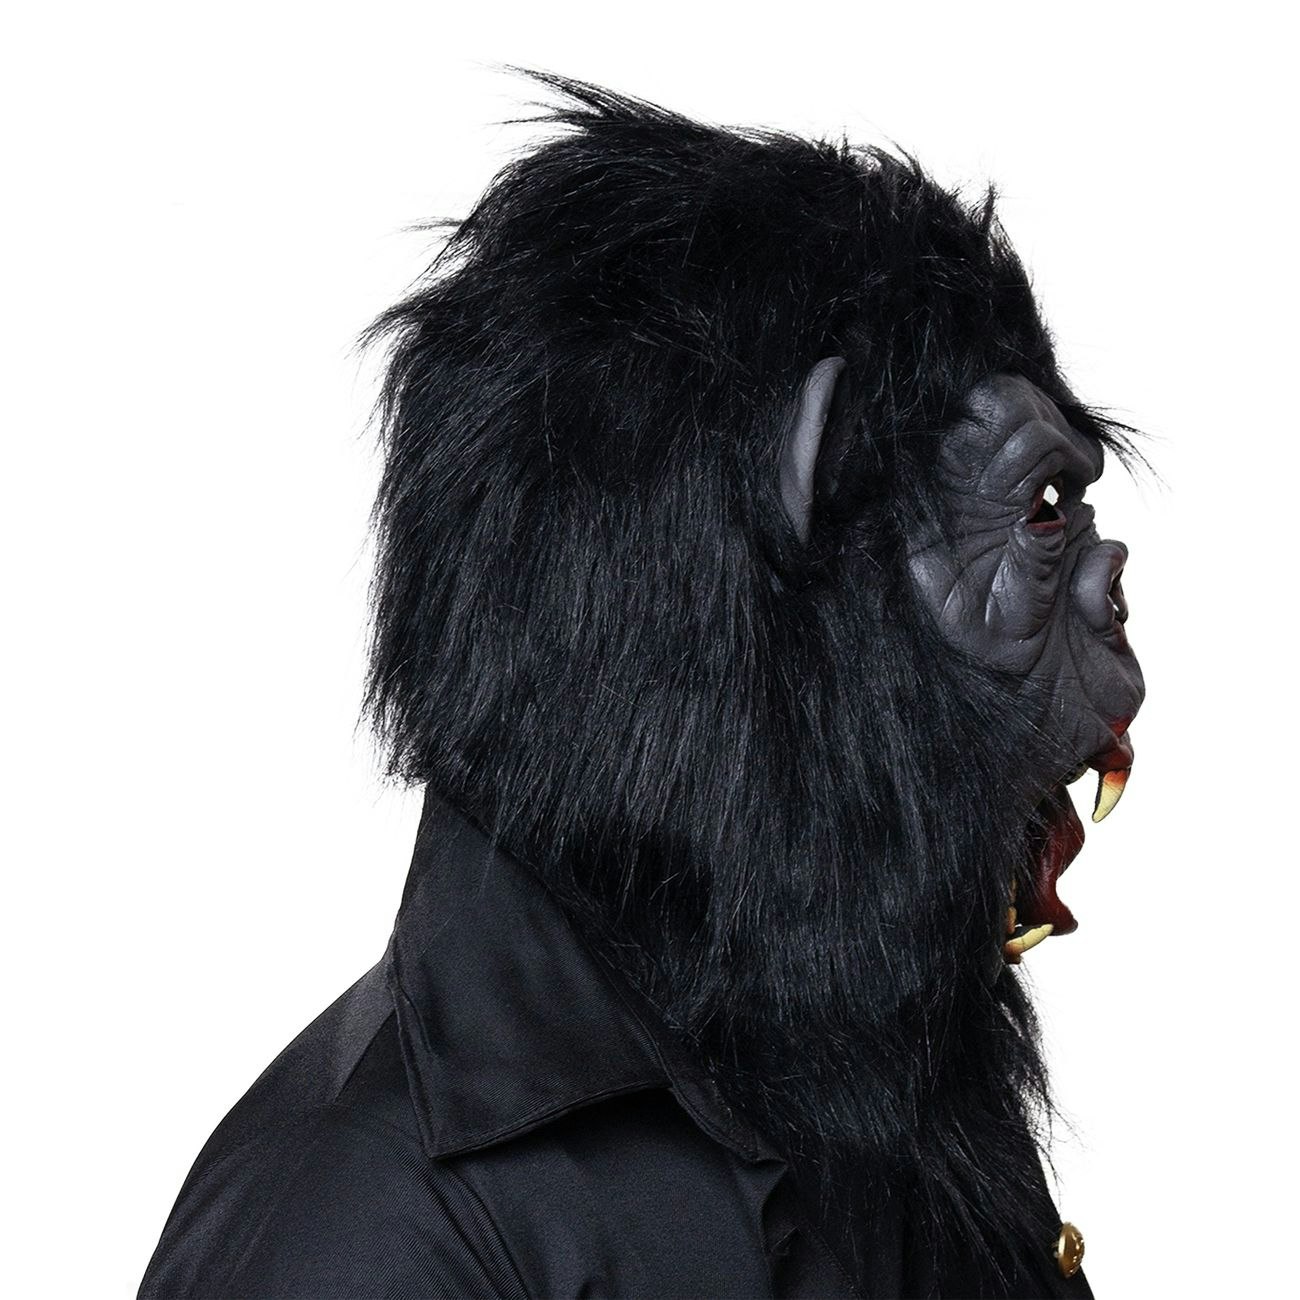 Arg Gorilla Mask